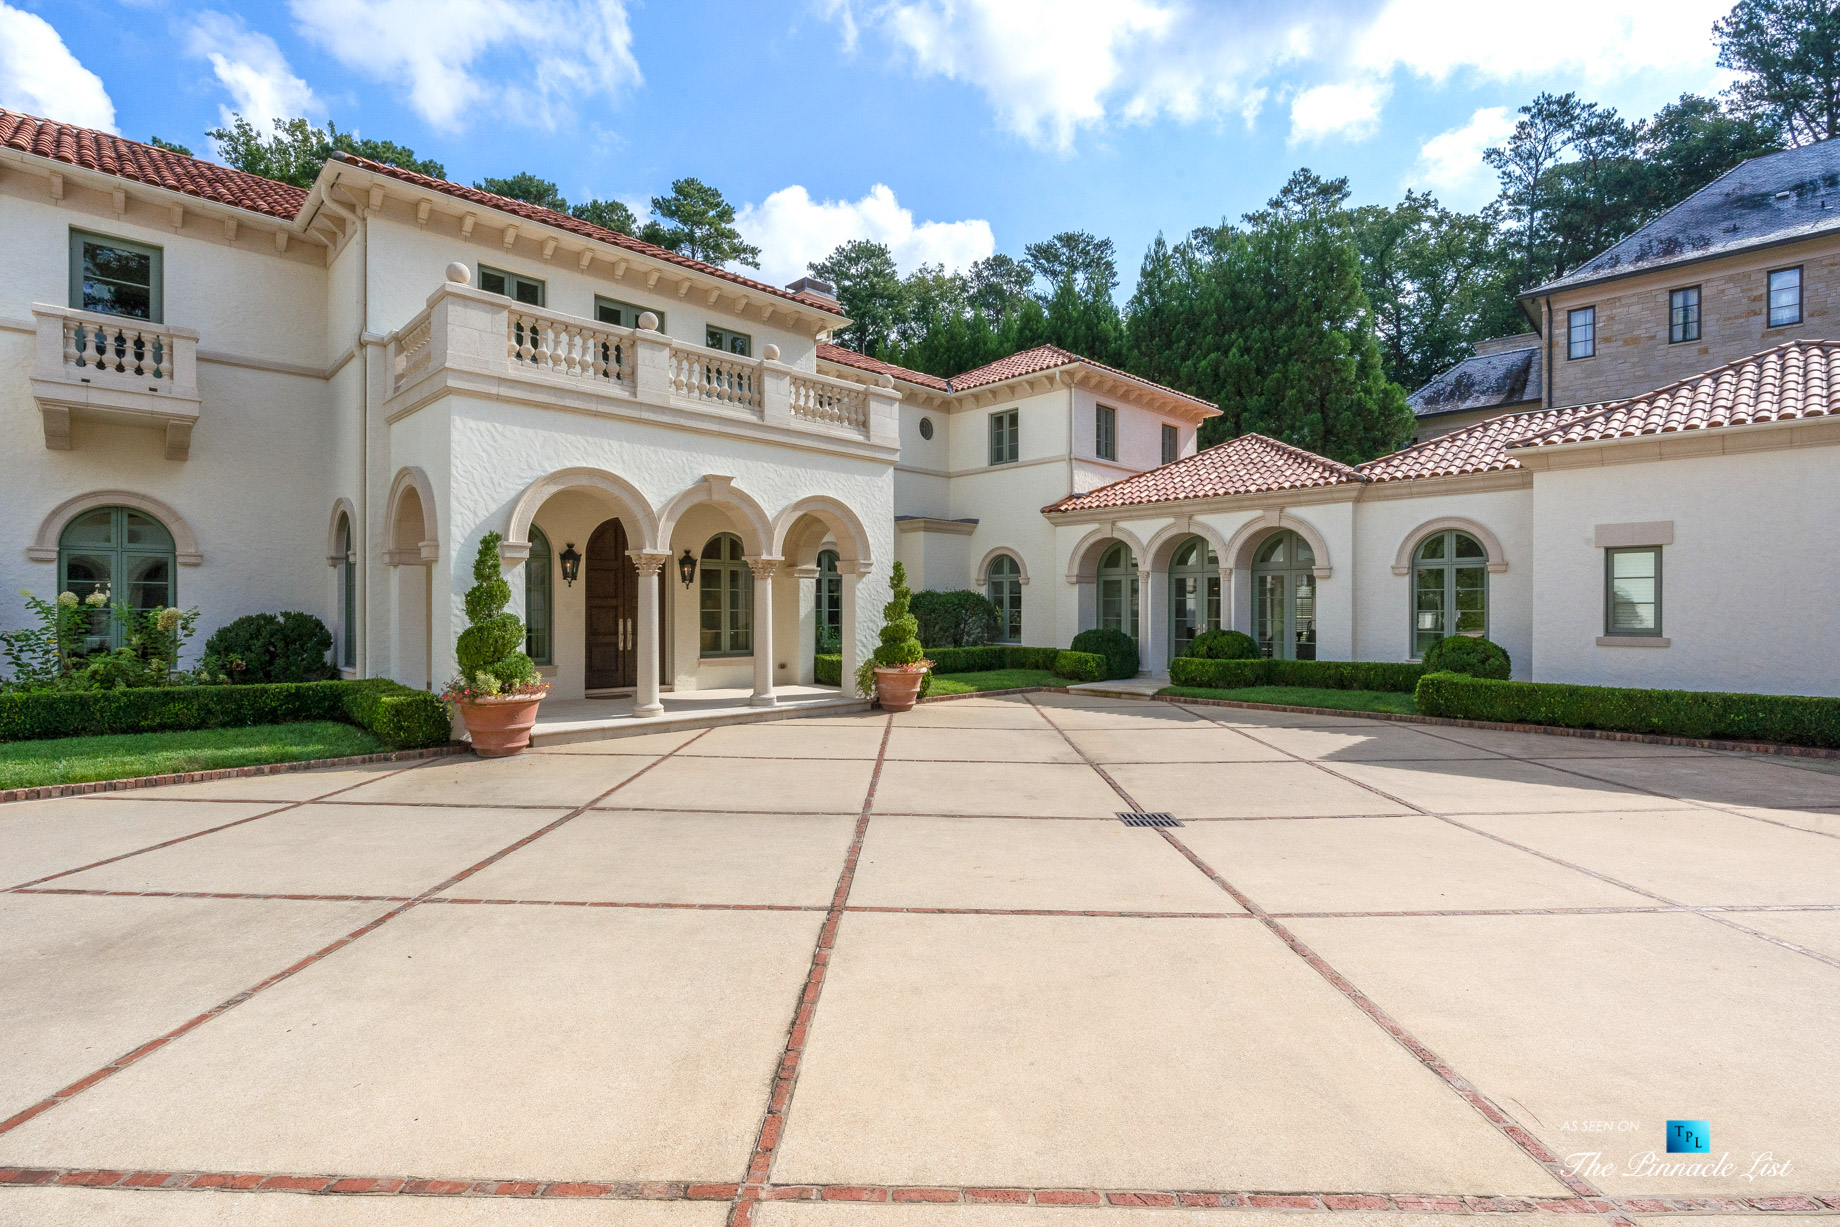 439 Blackland Rd NW, Atlanta, GA, USA – Interior Courtyard Driveway – Luxury Real Estate – Tuxedo Park Mediterranean Mansion Home